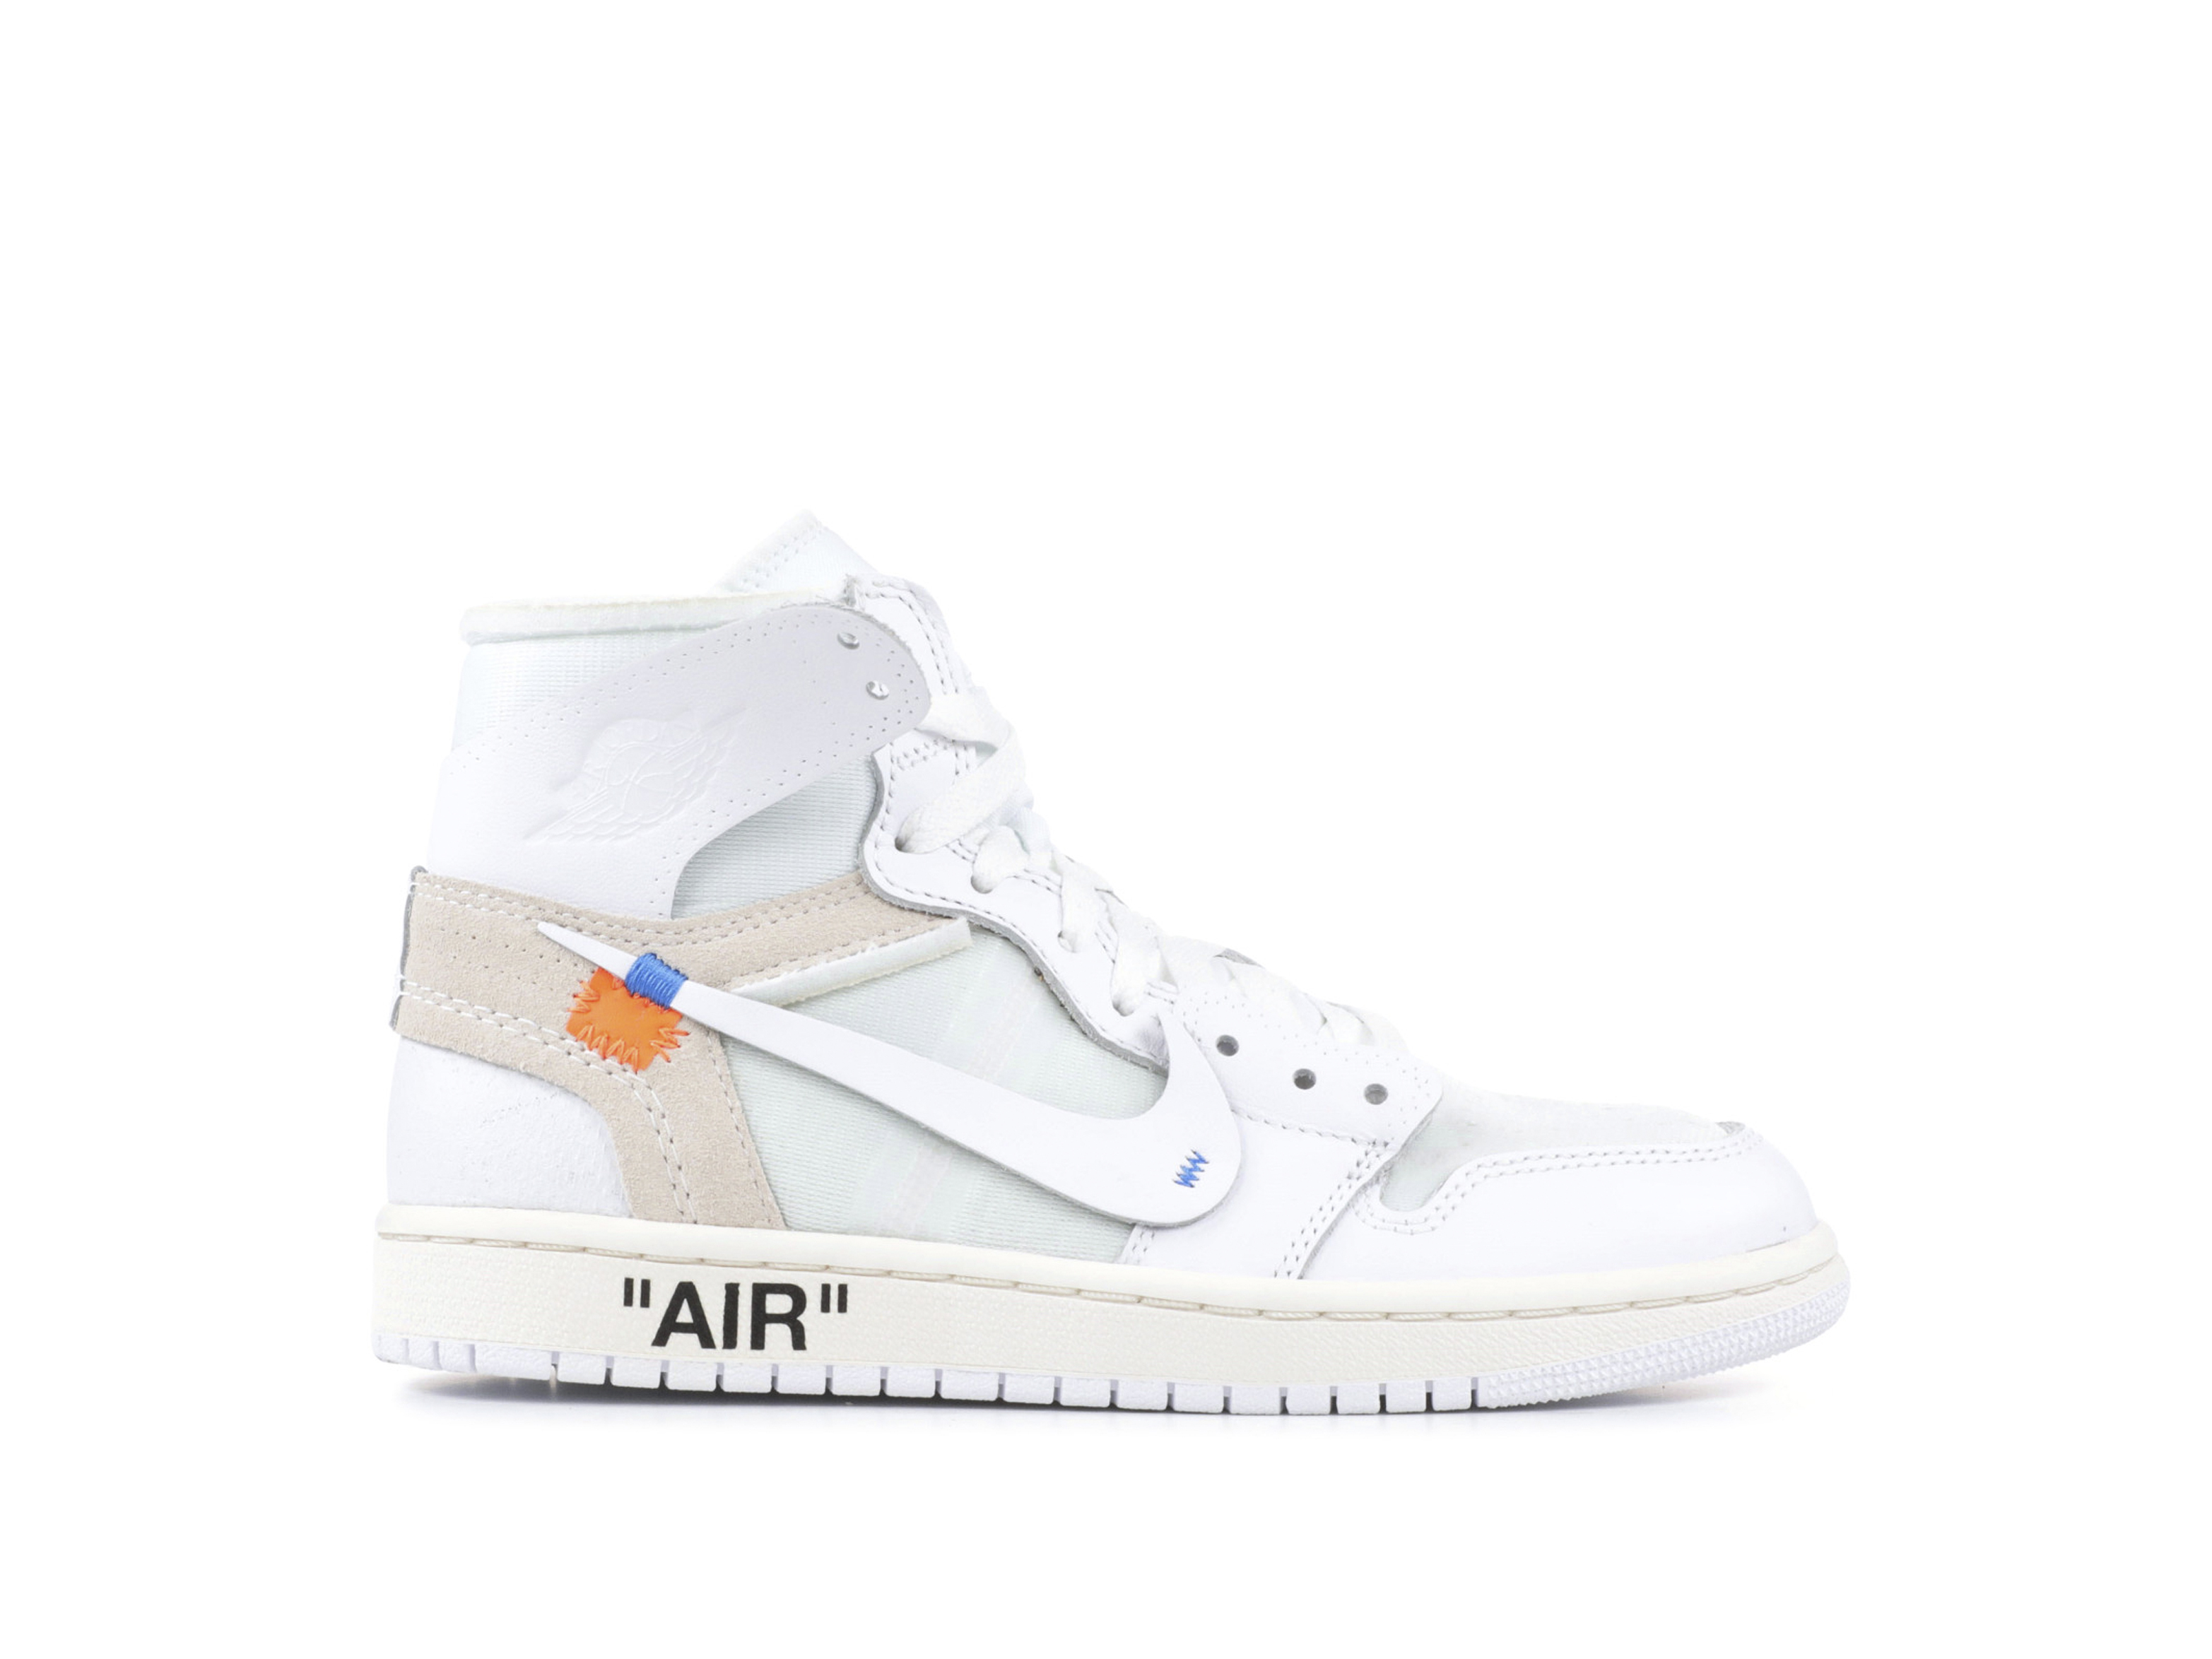 Jordan Brand Air Jordan 1 x OFF-WHITE NRG - Aq0818-100 - Sneakersnstuff  (SNS)